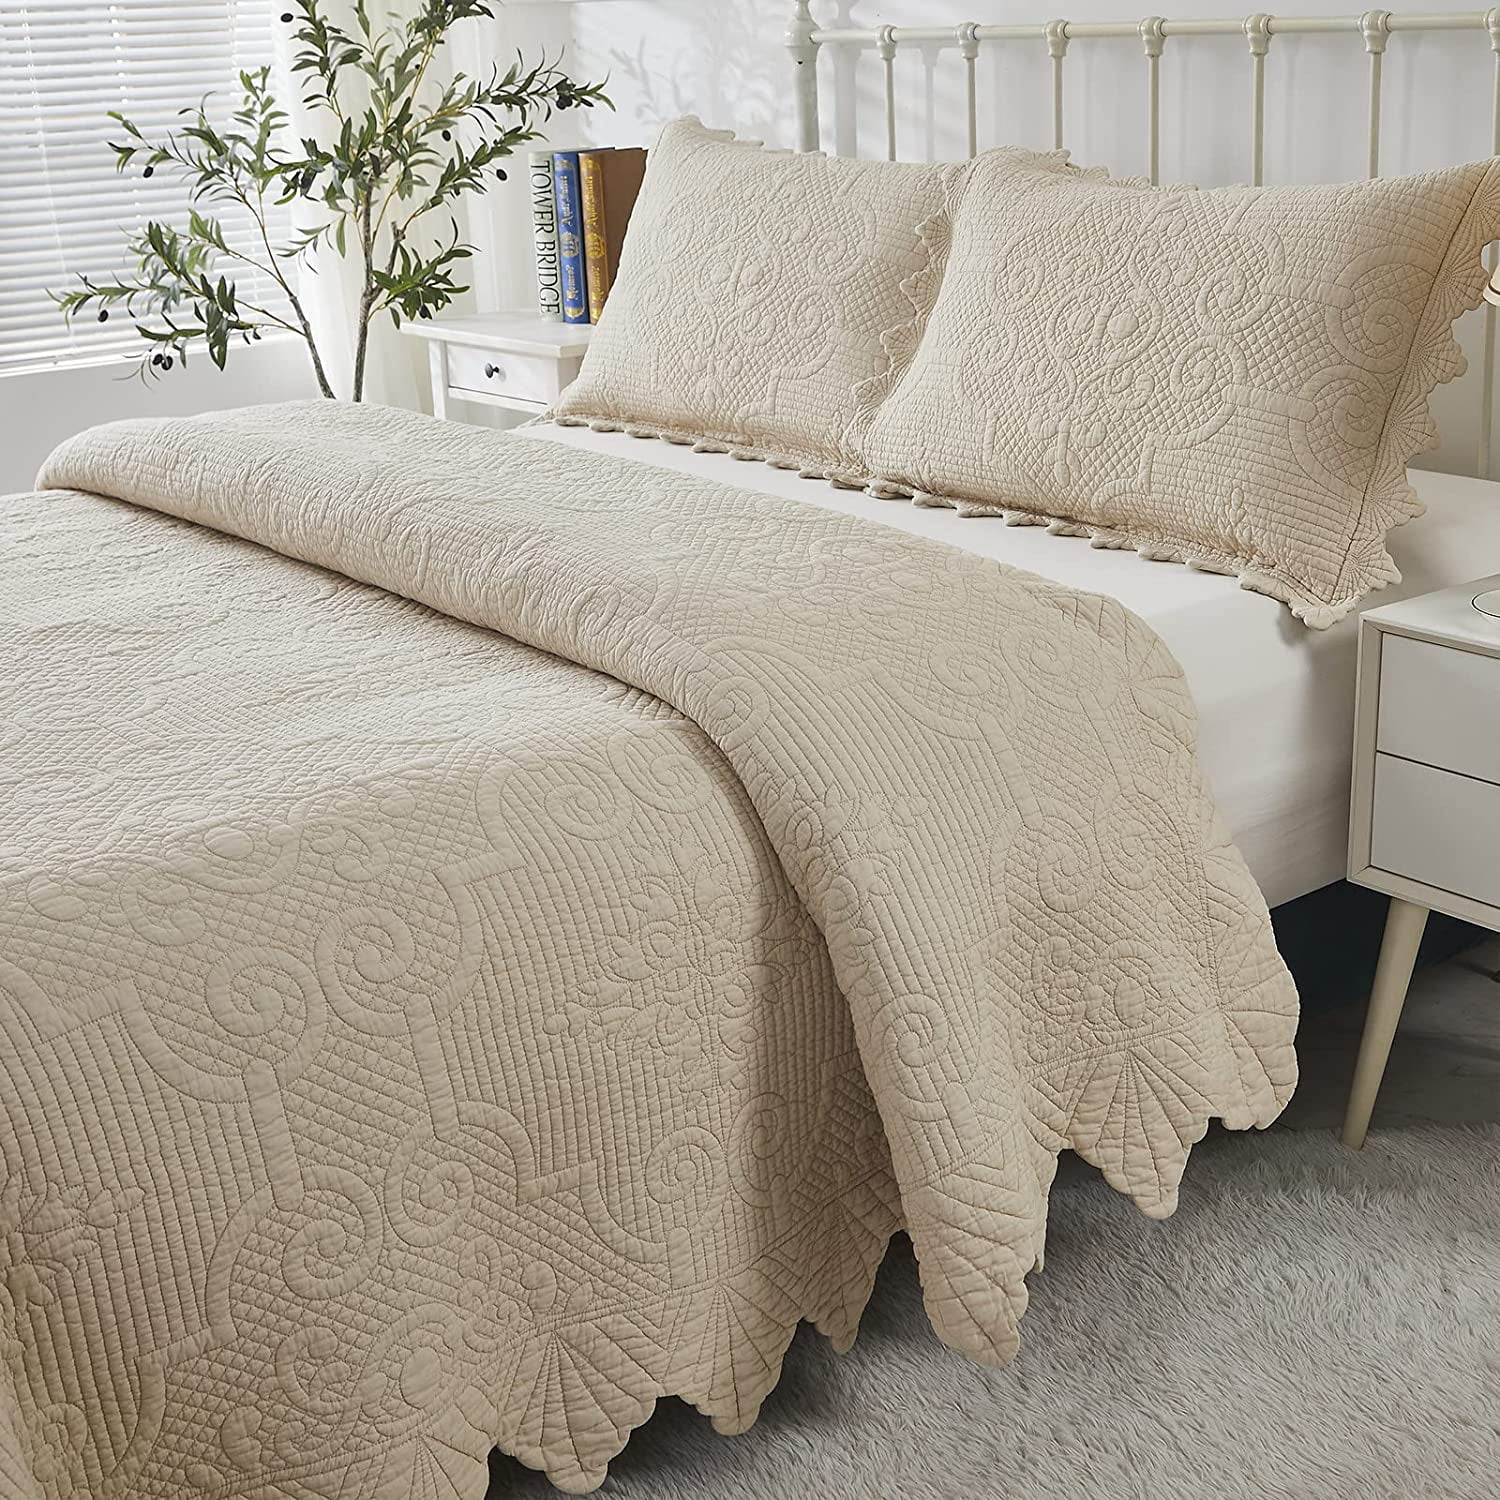 Comforter. Sobrecama - Queen - household items - by owner